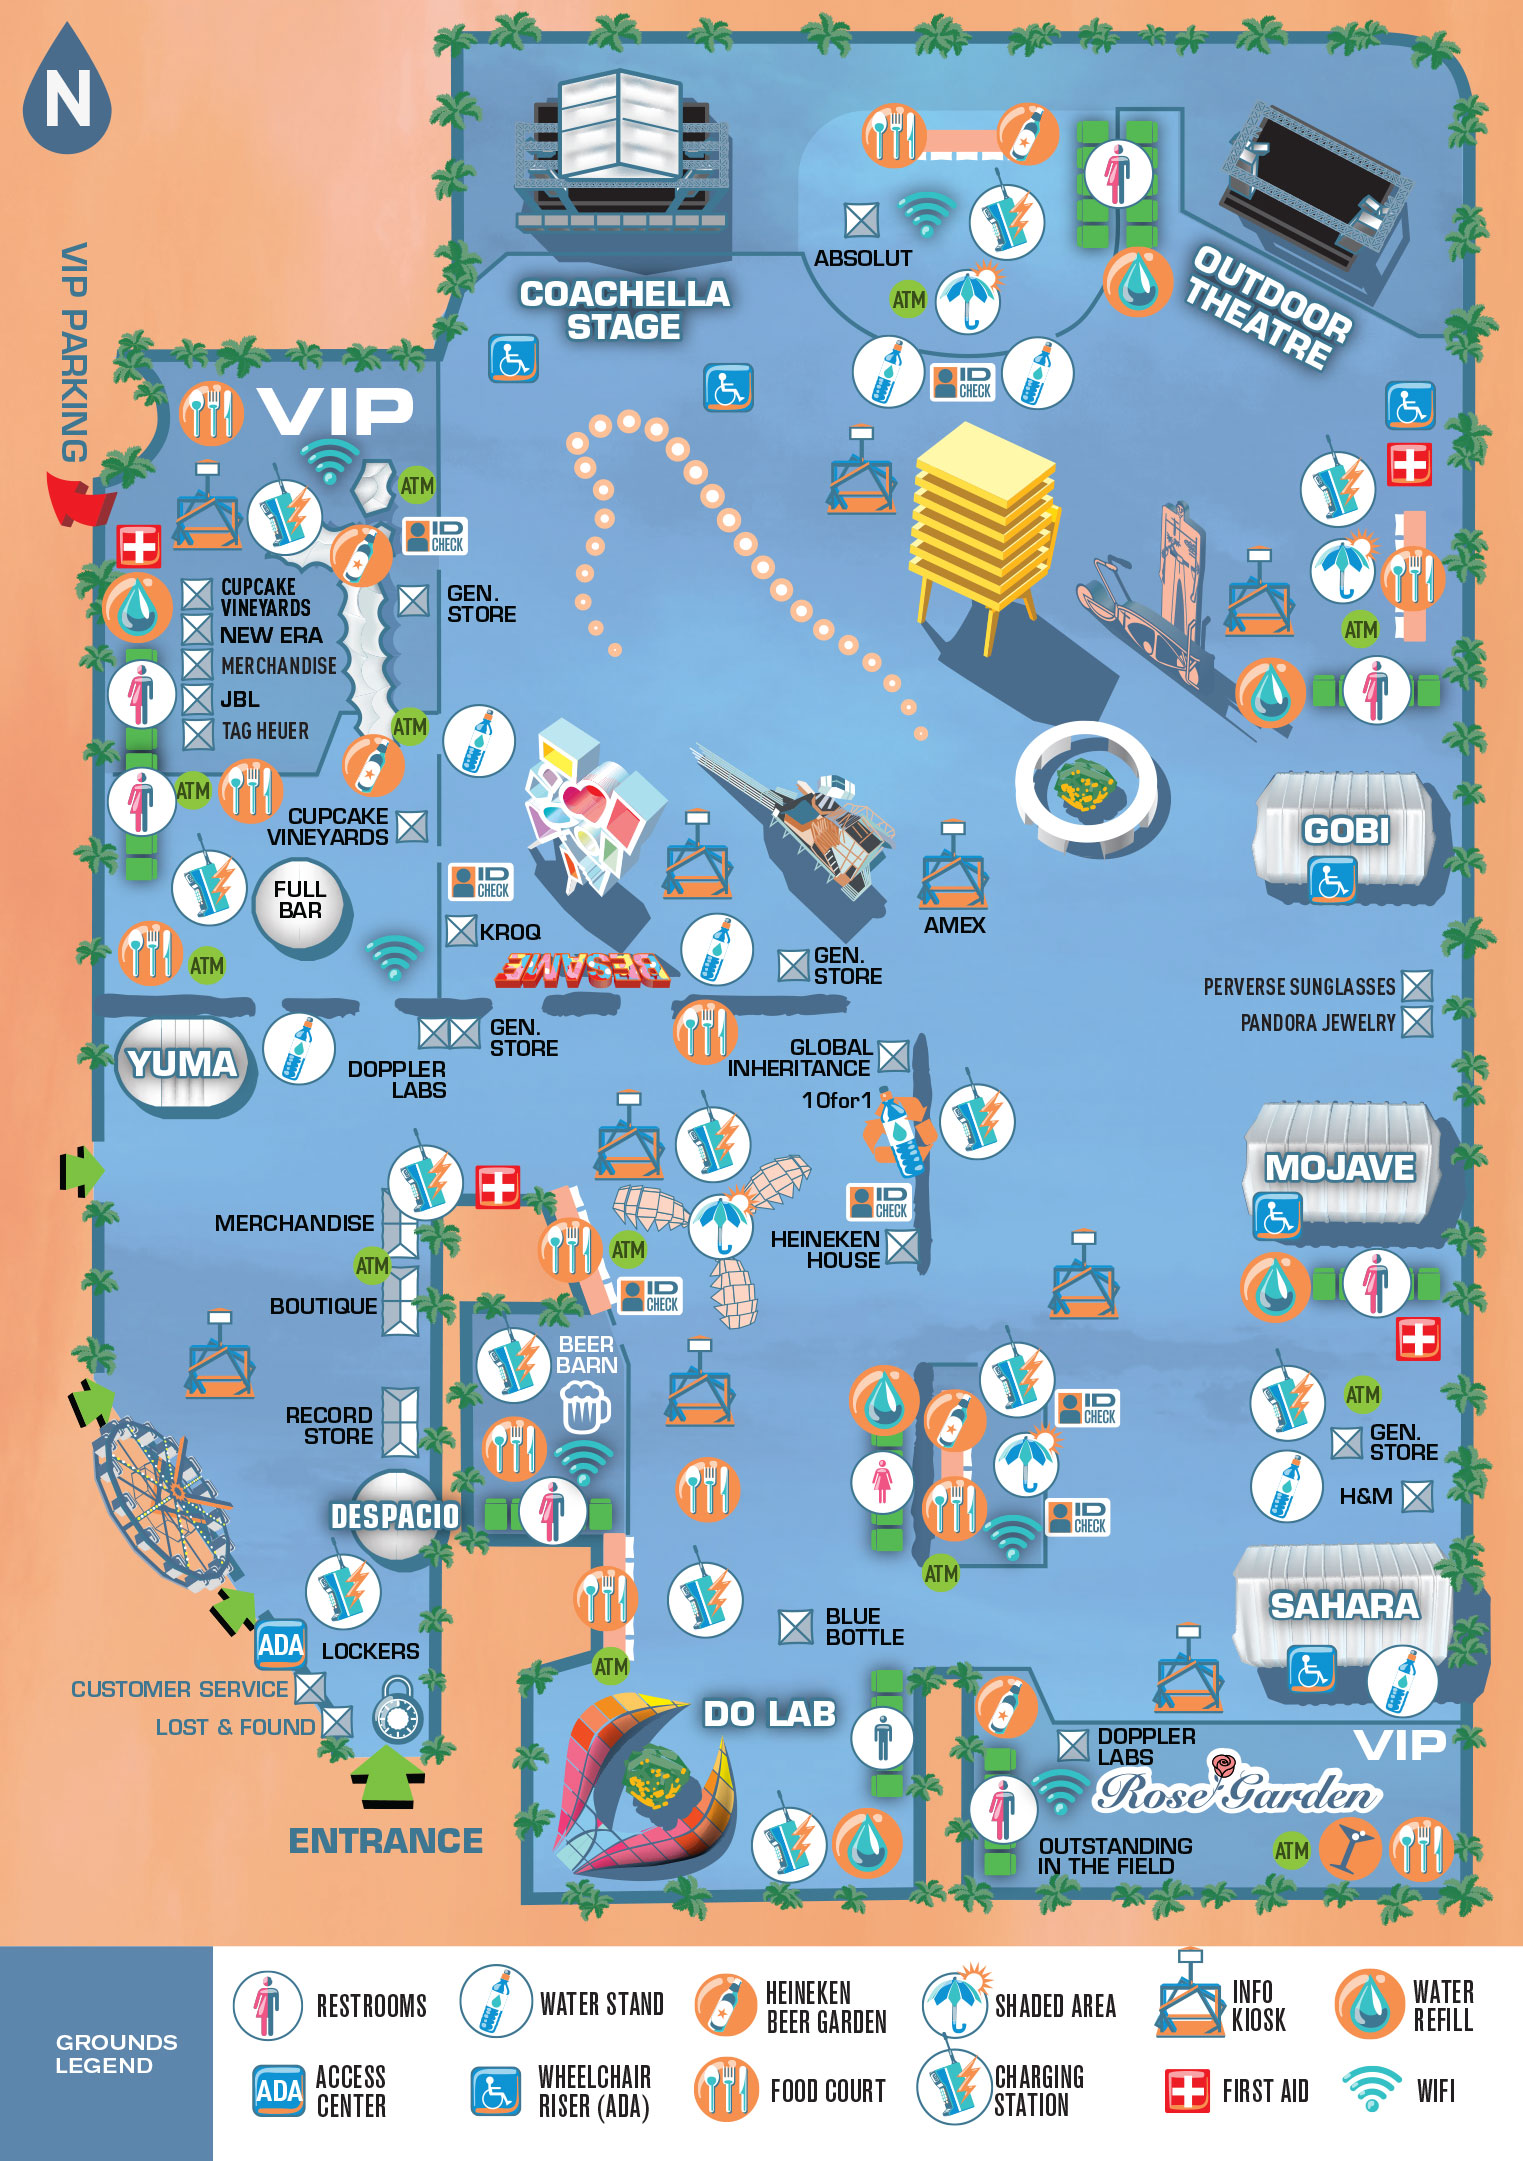 Coachella 2016 Set Times & Festival Map Announced - GDE